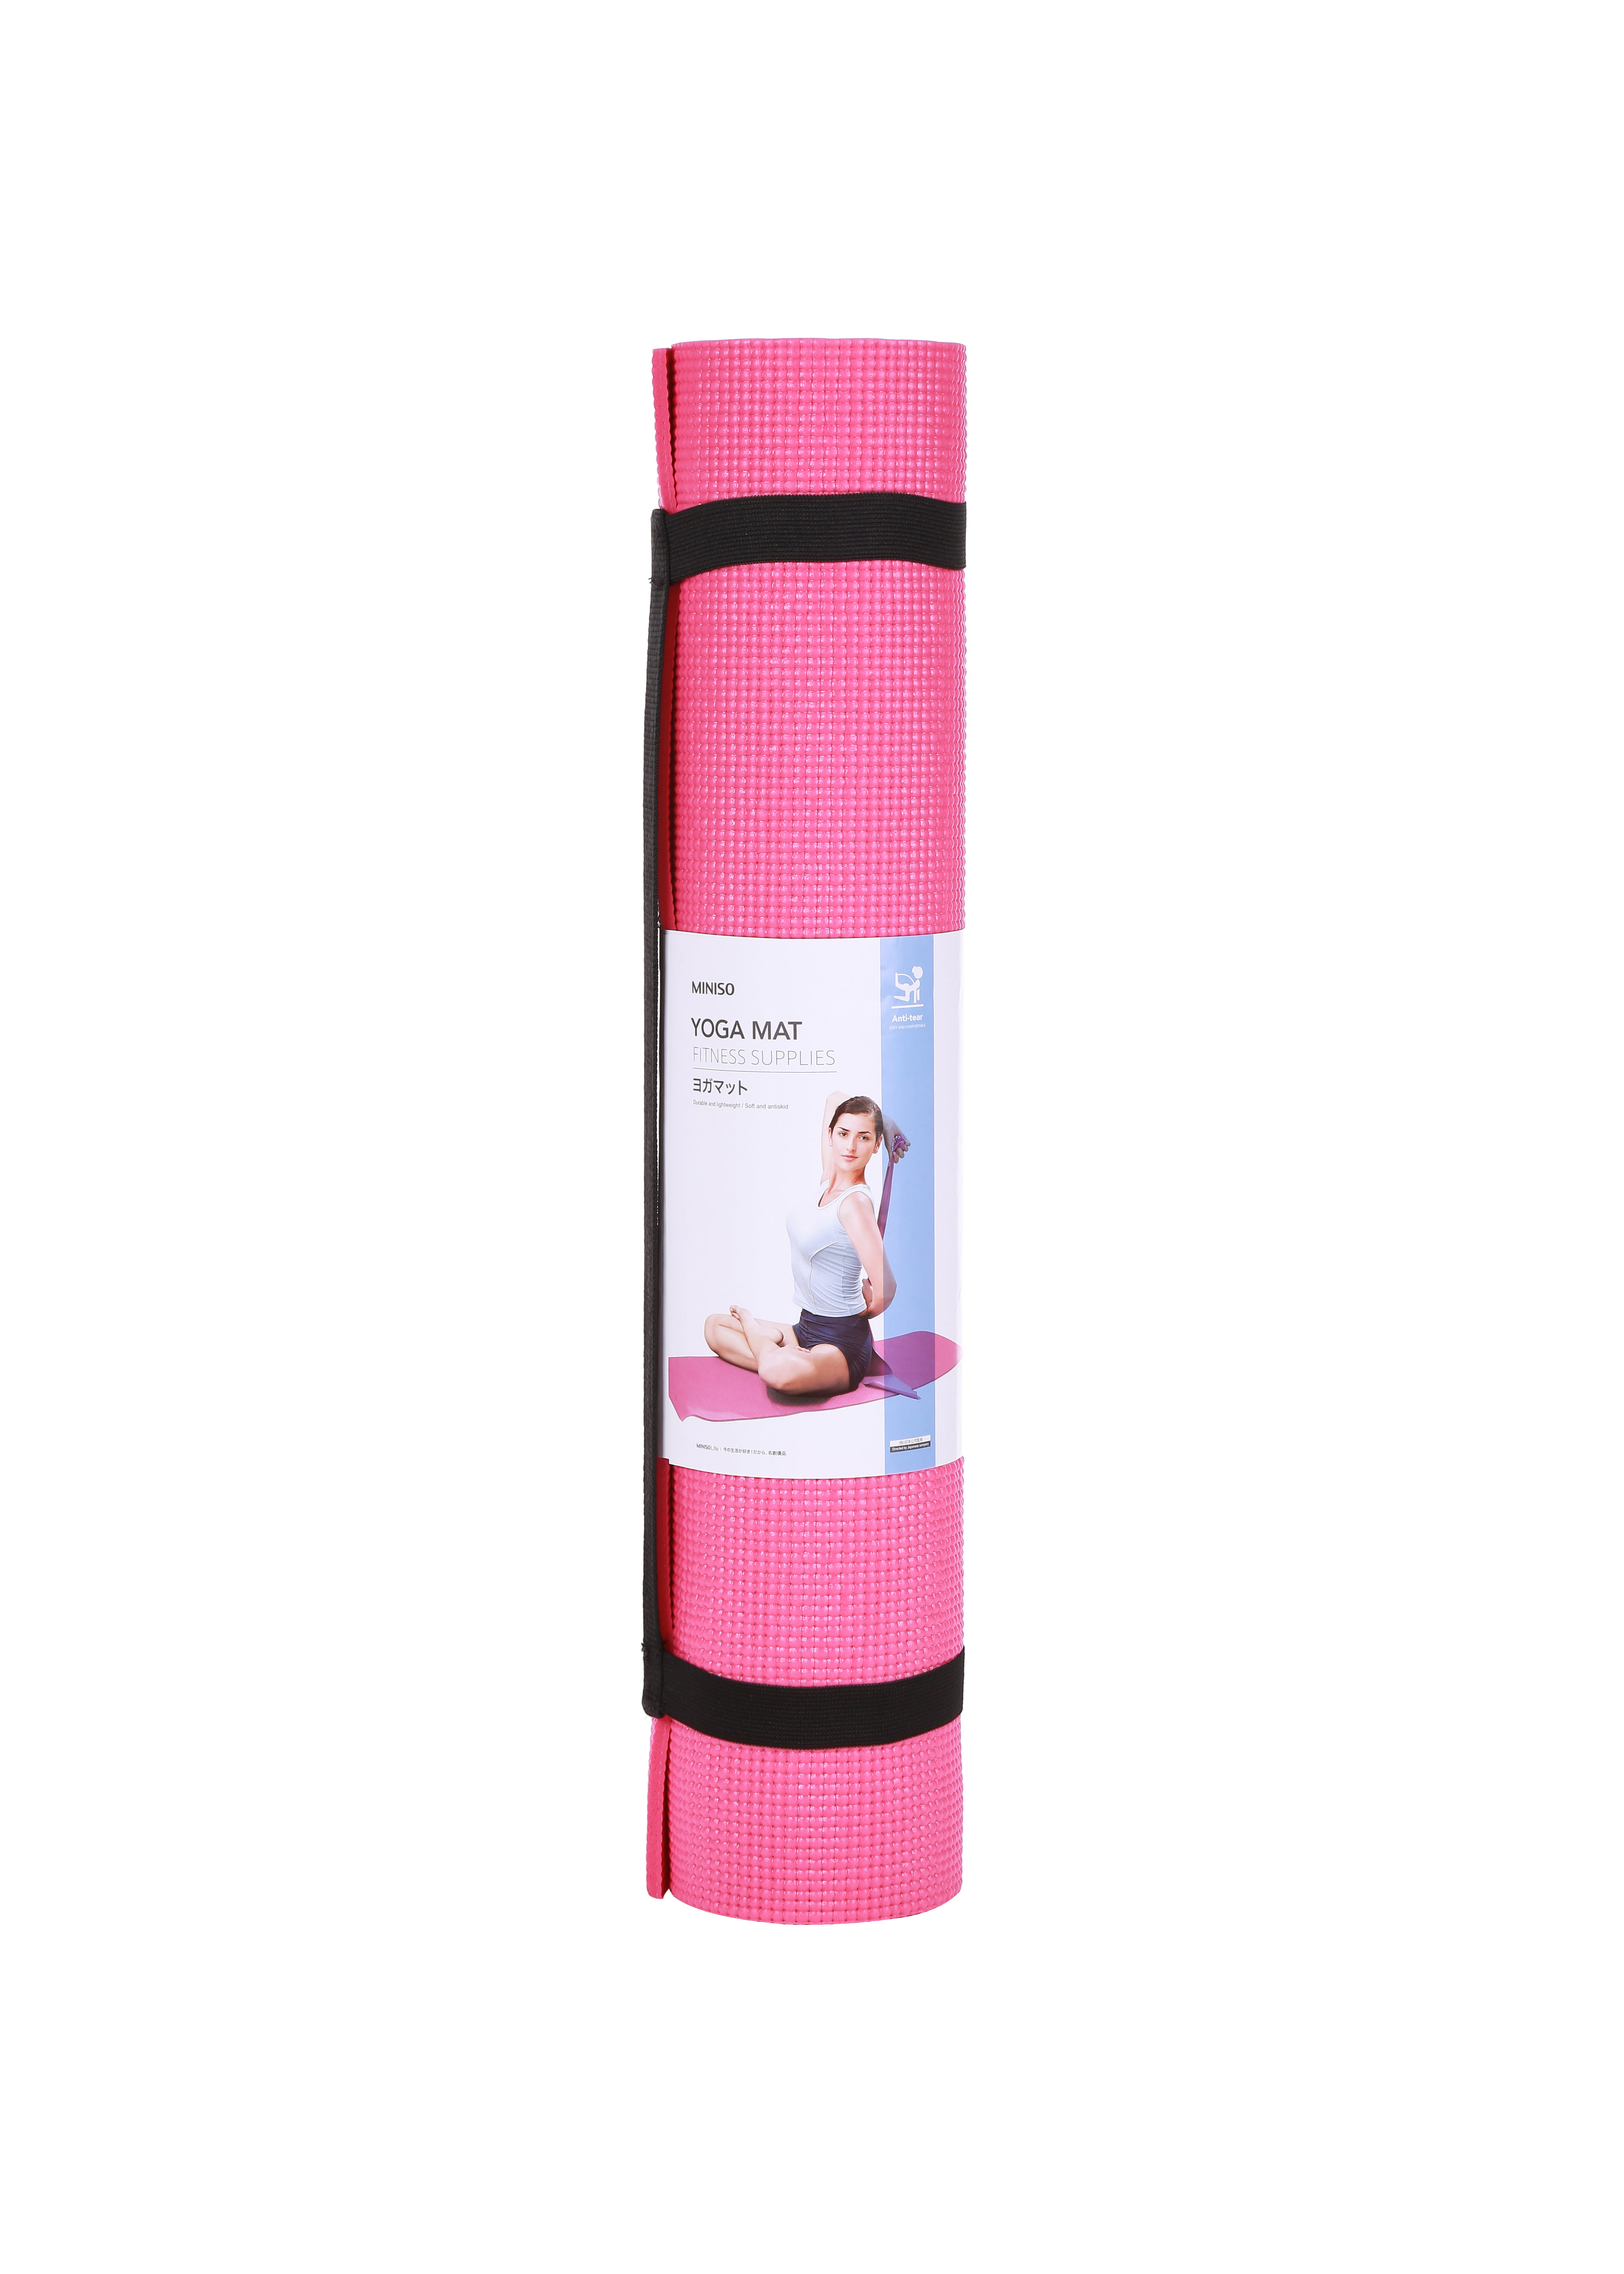 miniso yoga mat price